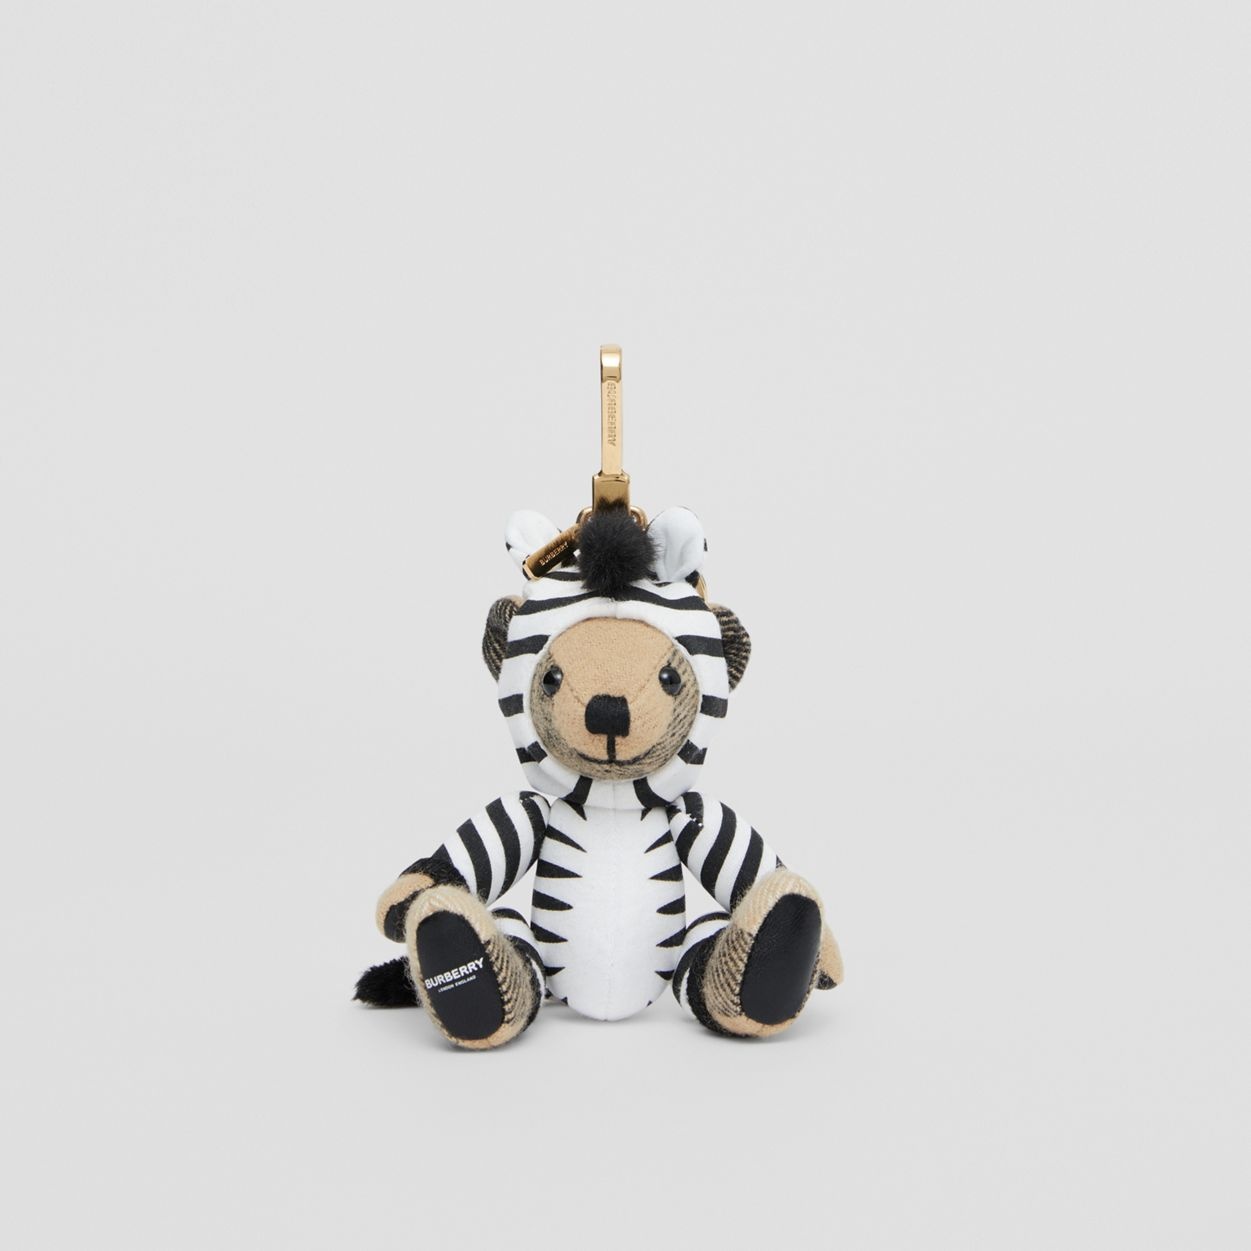 Thomas Bear Charm in Zebra Costume - 3